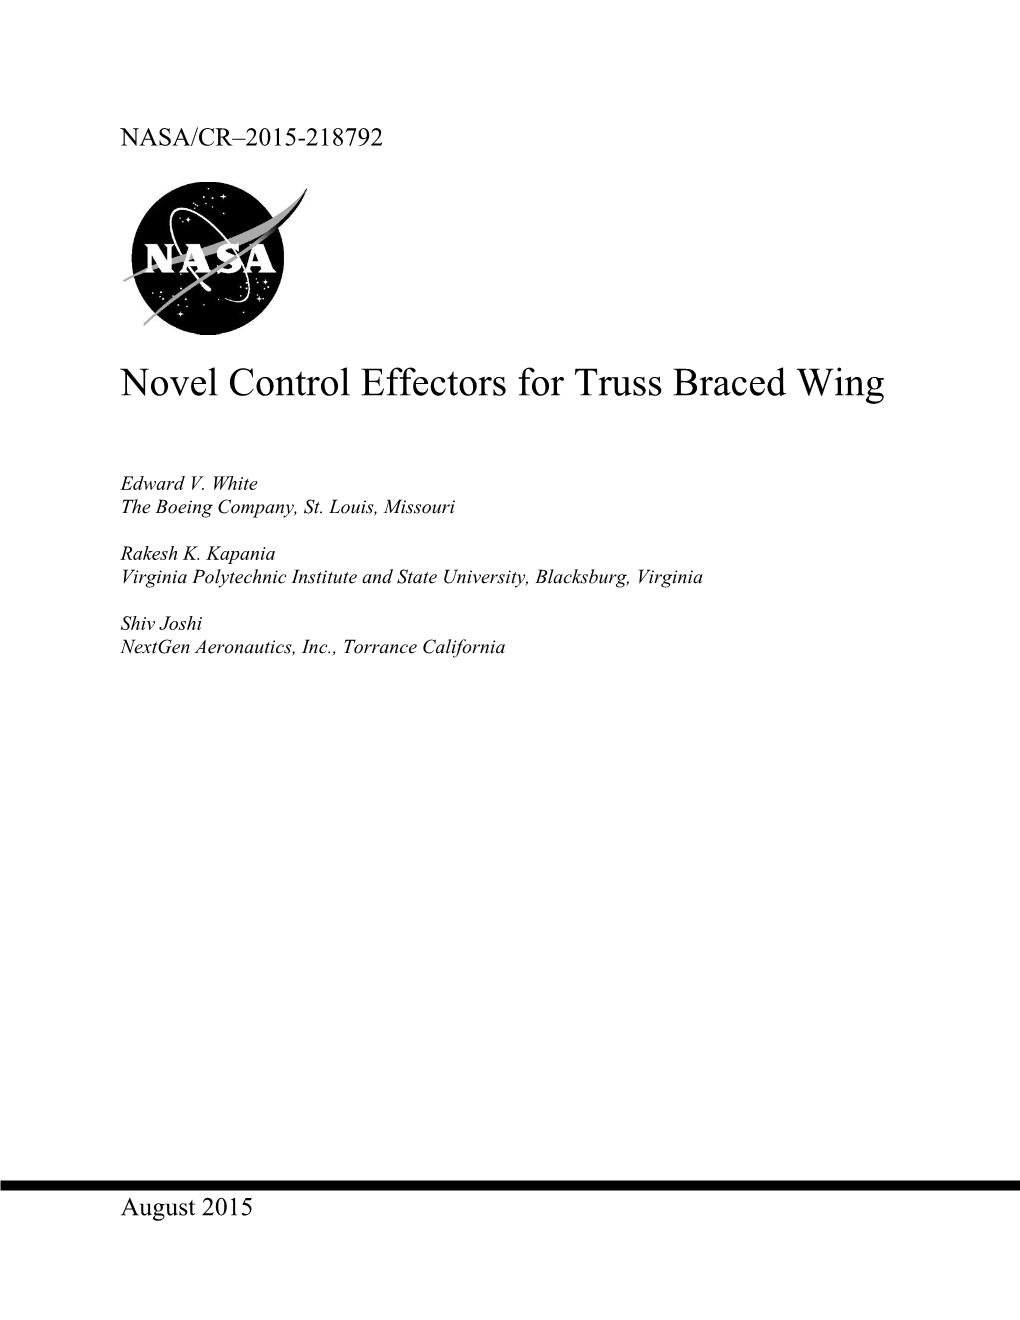 Novel Control Effectors for Truss Braced Wing